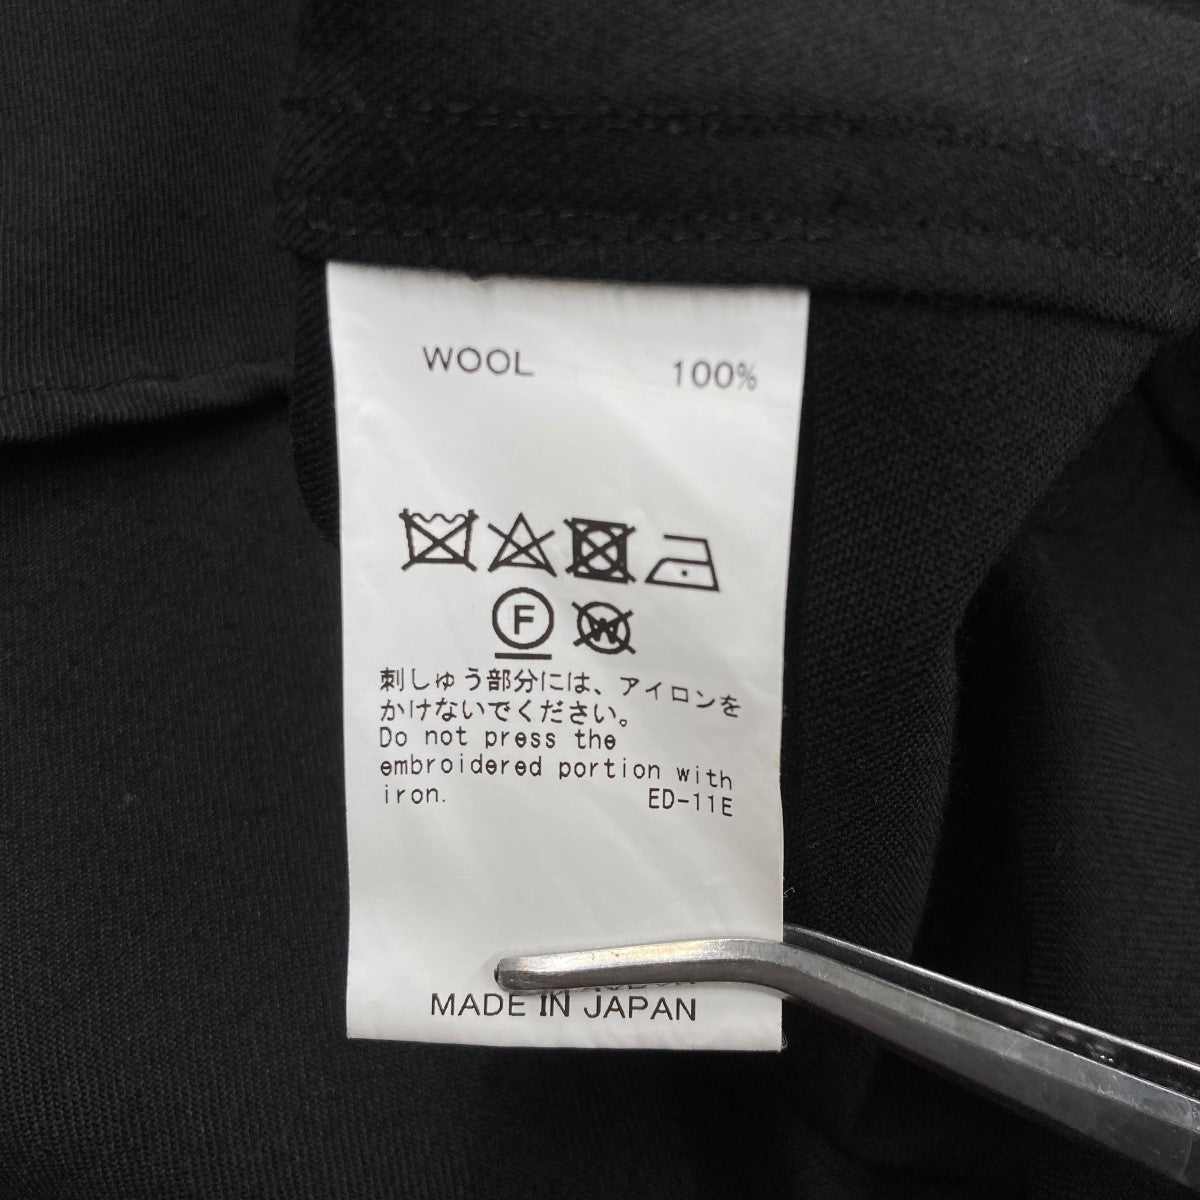 DAIRIKU(ダイリク) 19AWBiggie XL Baseball Shirtベースボールシャツ19AW S 3 19AW S 3 ブラック  サイズ 18｜【公式】カインドオルオンライン ブランド古着・中古通販【kindal】